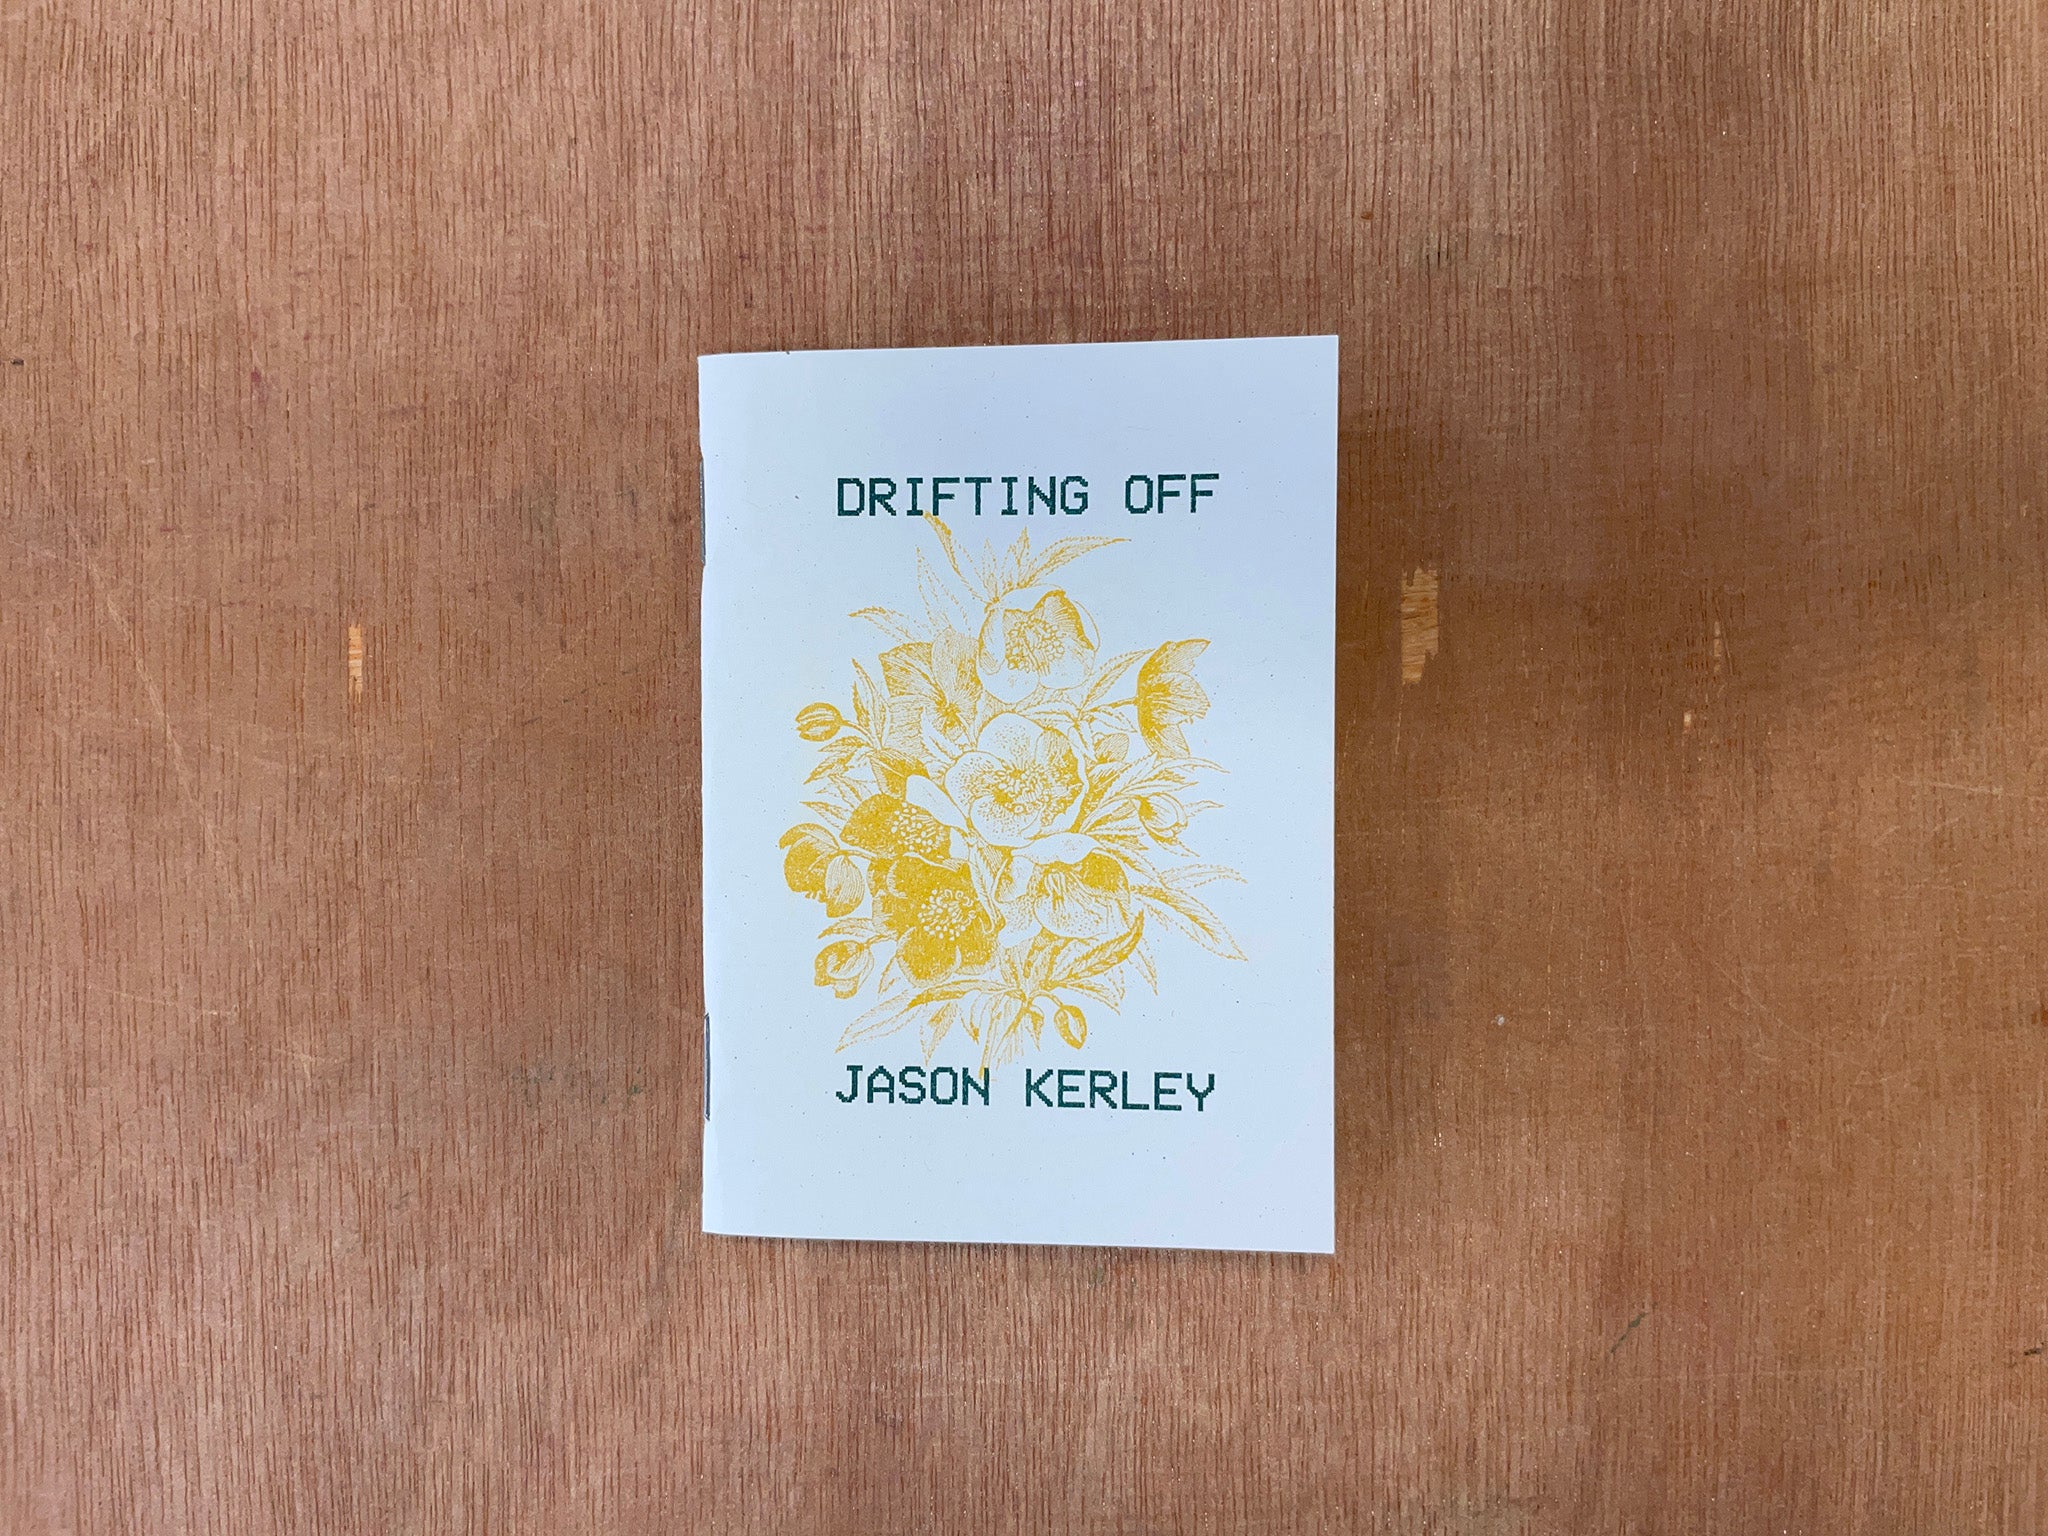 DRIFTING OFF by Jason Kerley